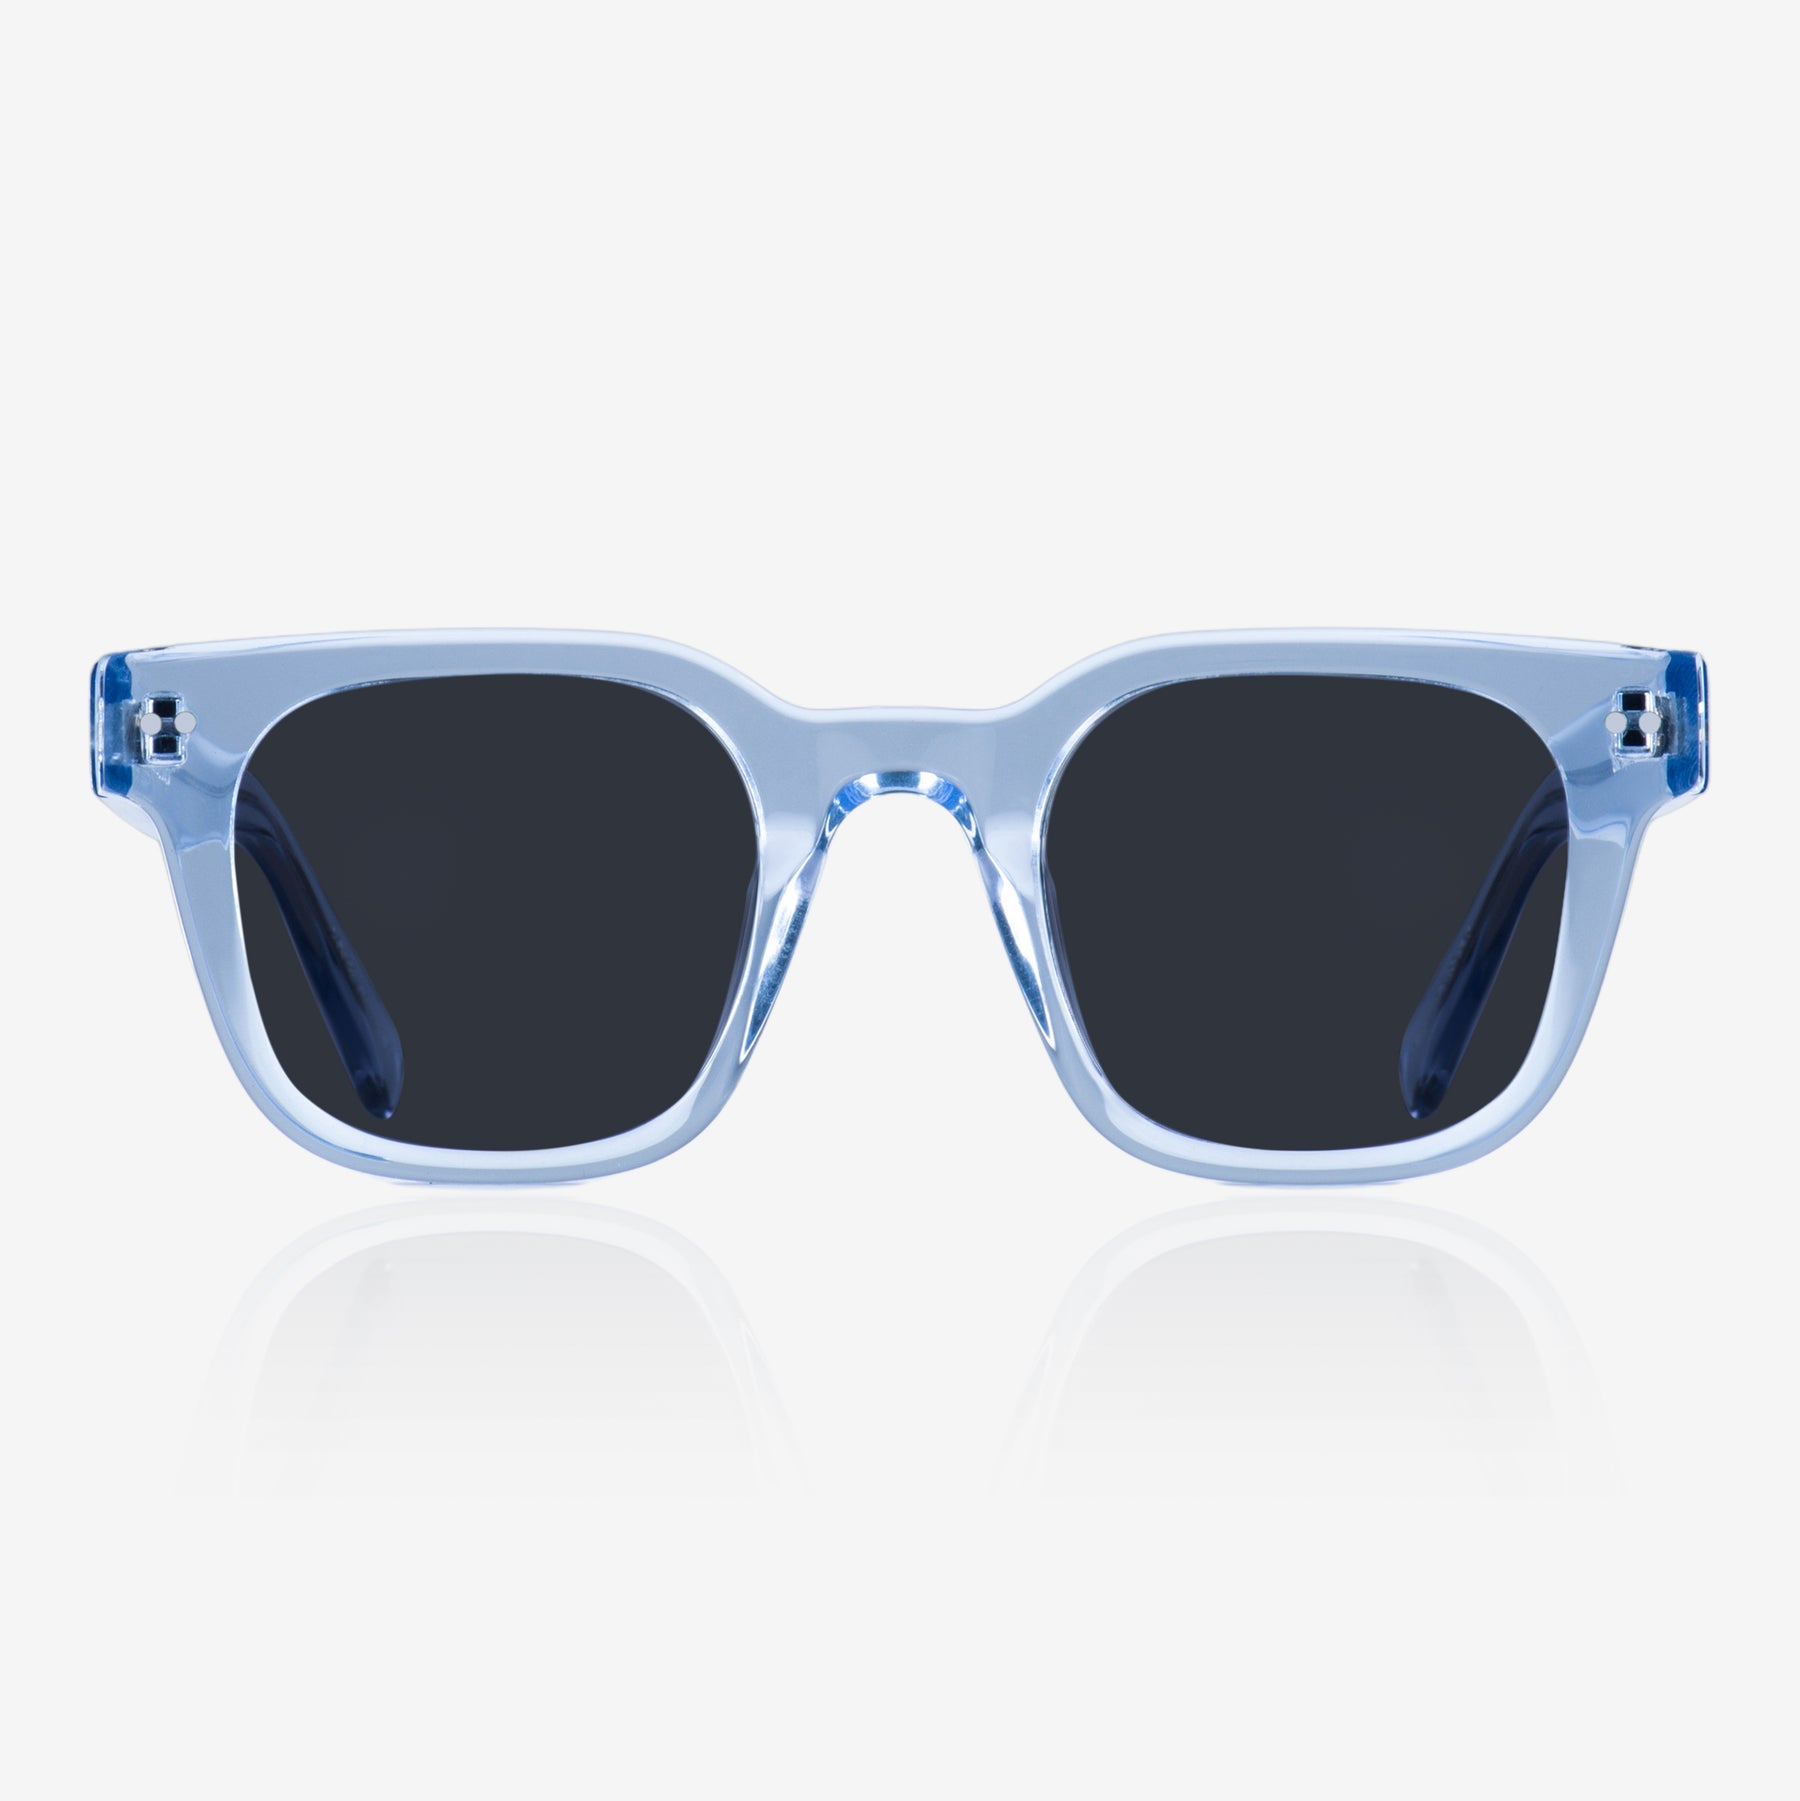 De-sunglasses| Dash aqua | Sunglasses for men and women